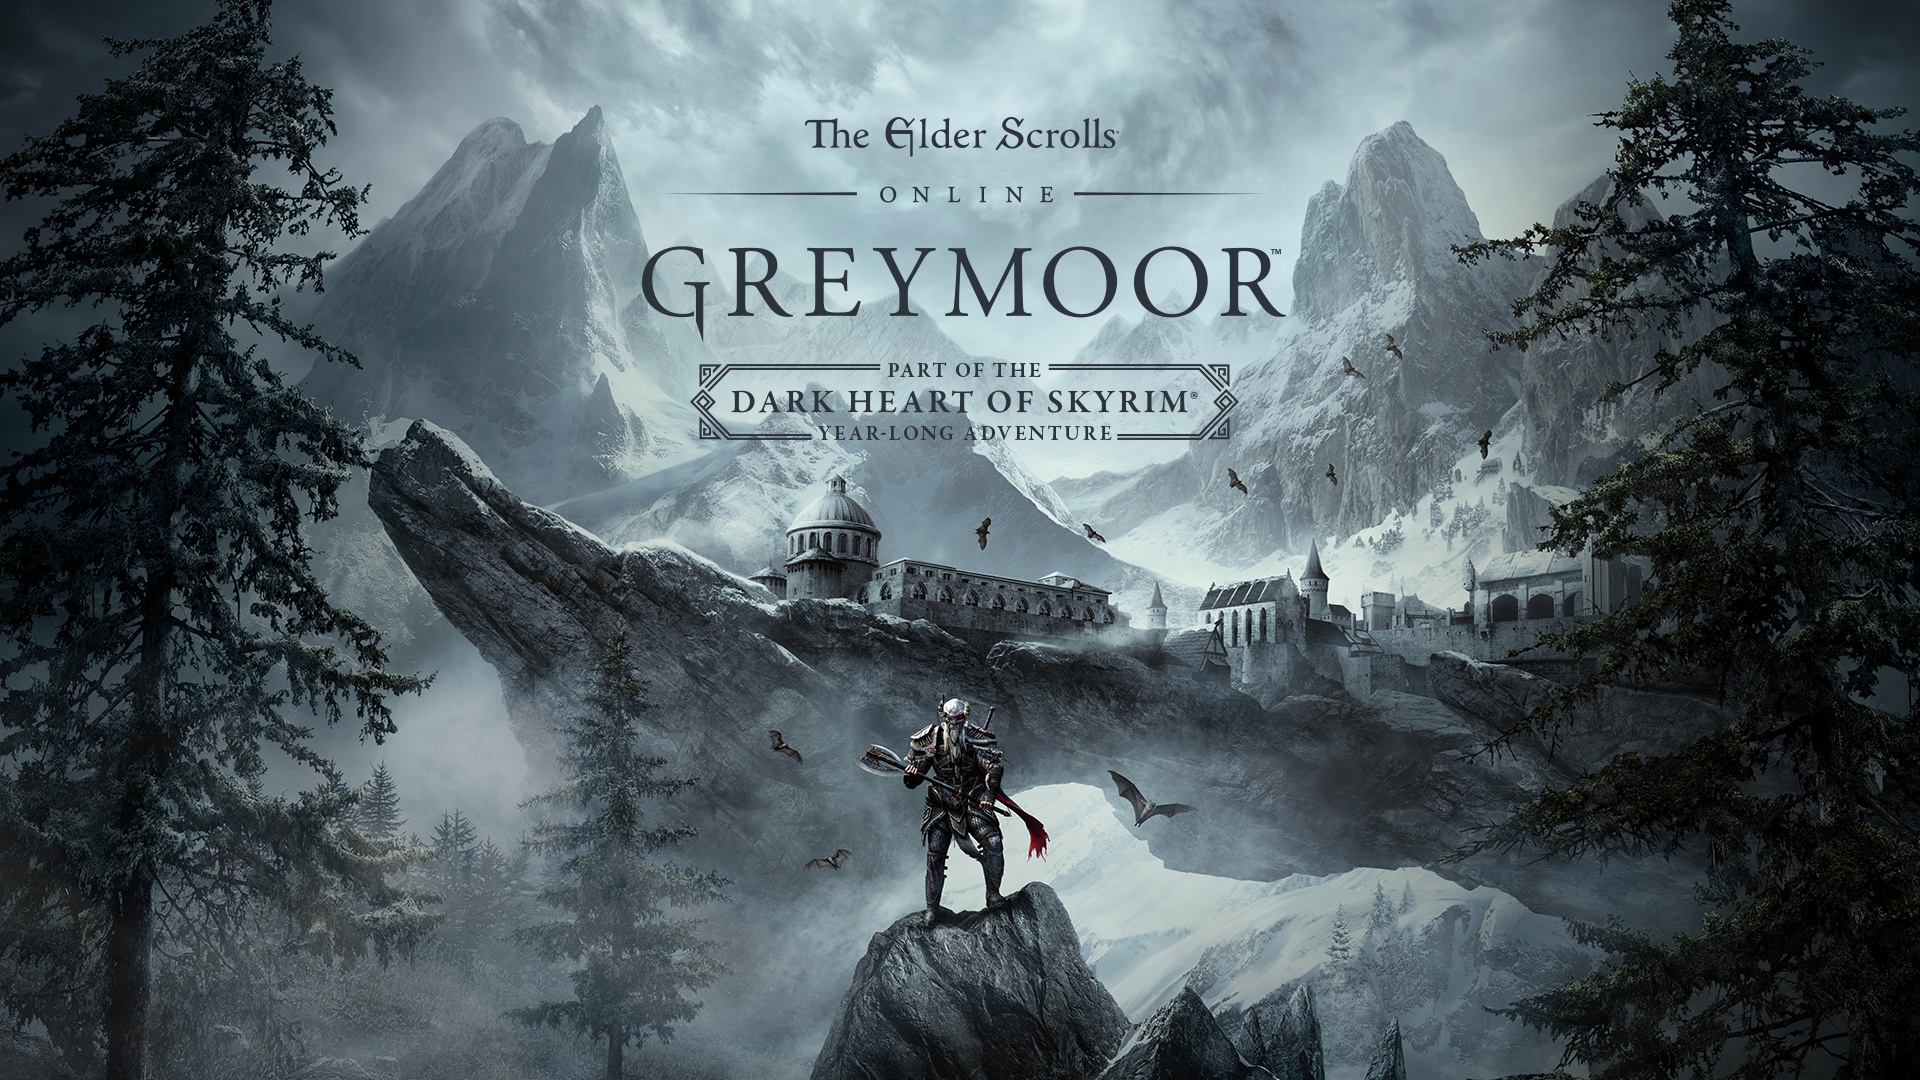 Video For Discover the Dark Heart of Skyrim in The Elder Scrolls Online: Greymoor, Coming June 2 to Xbox